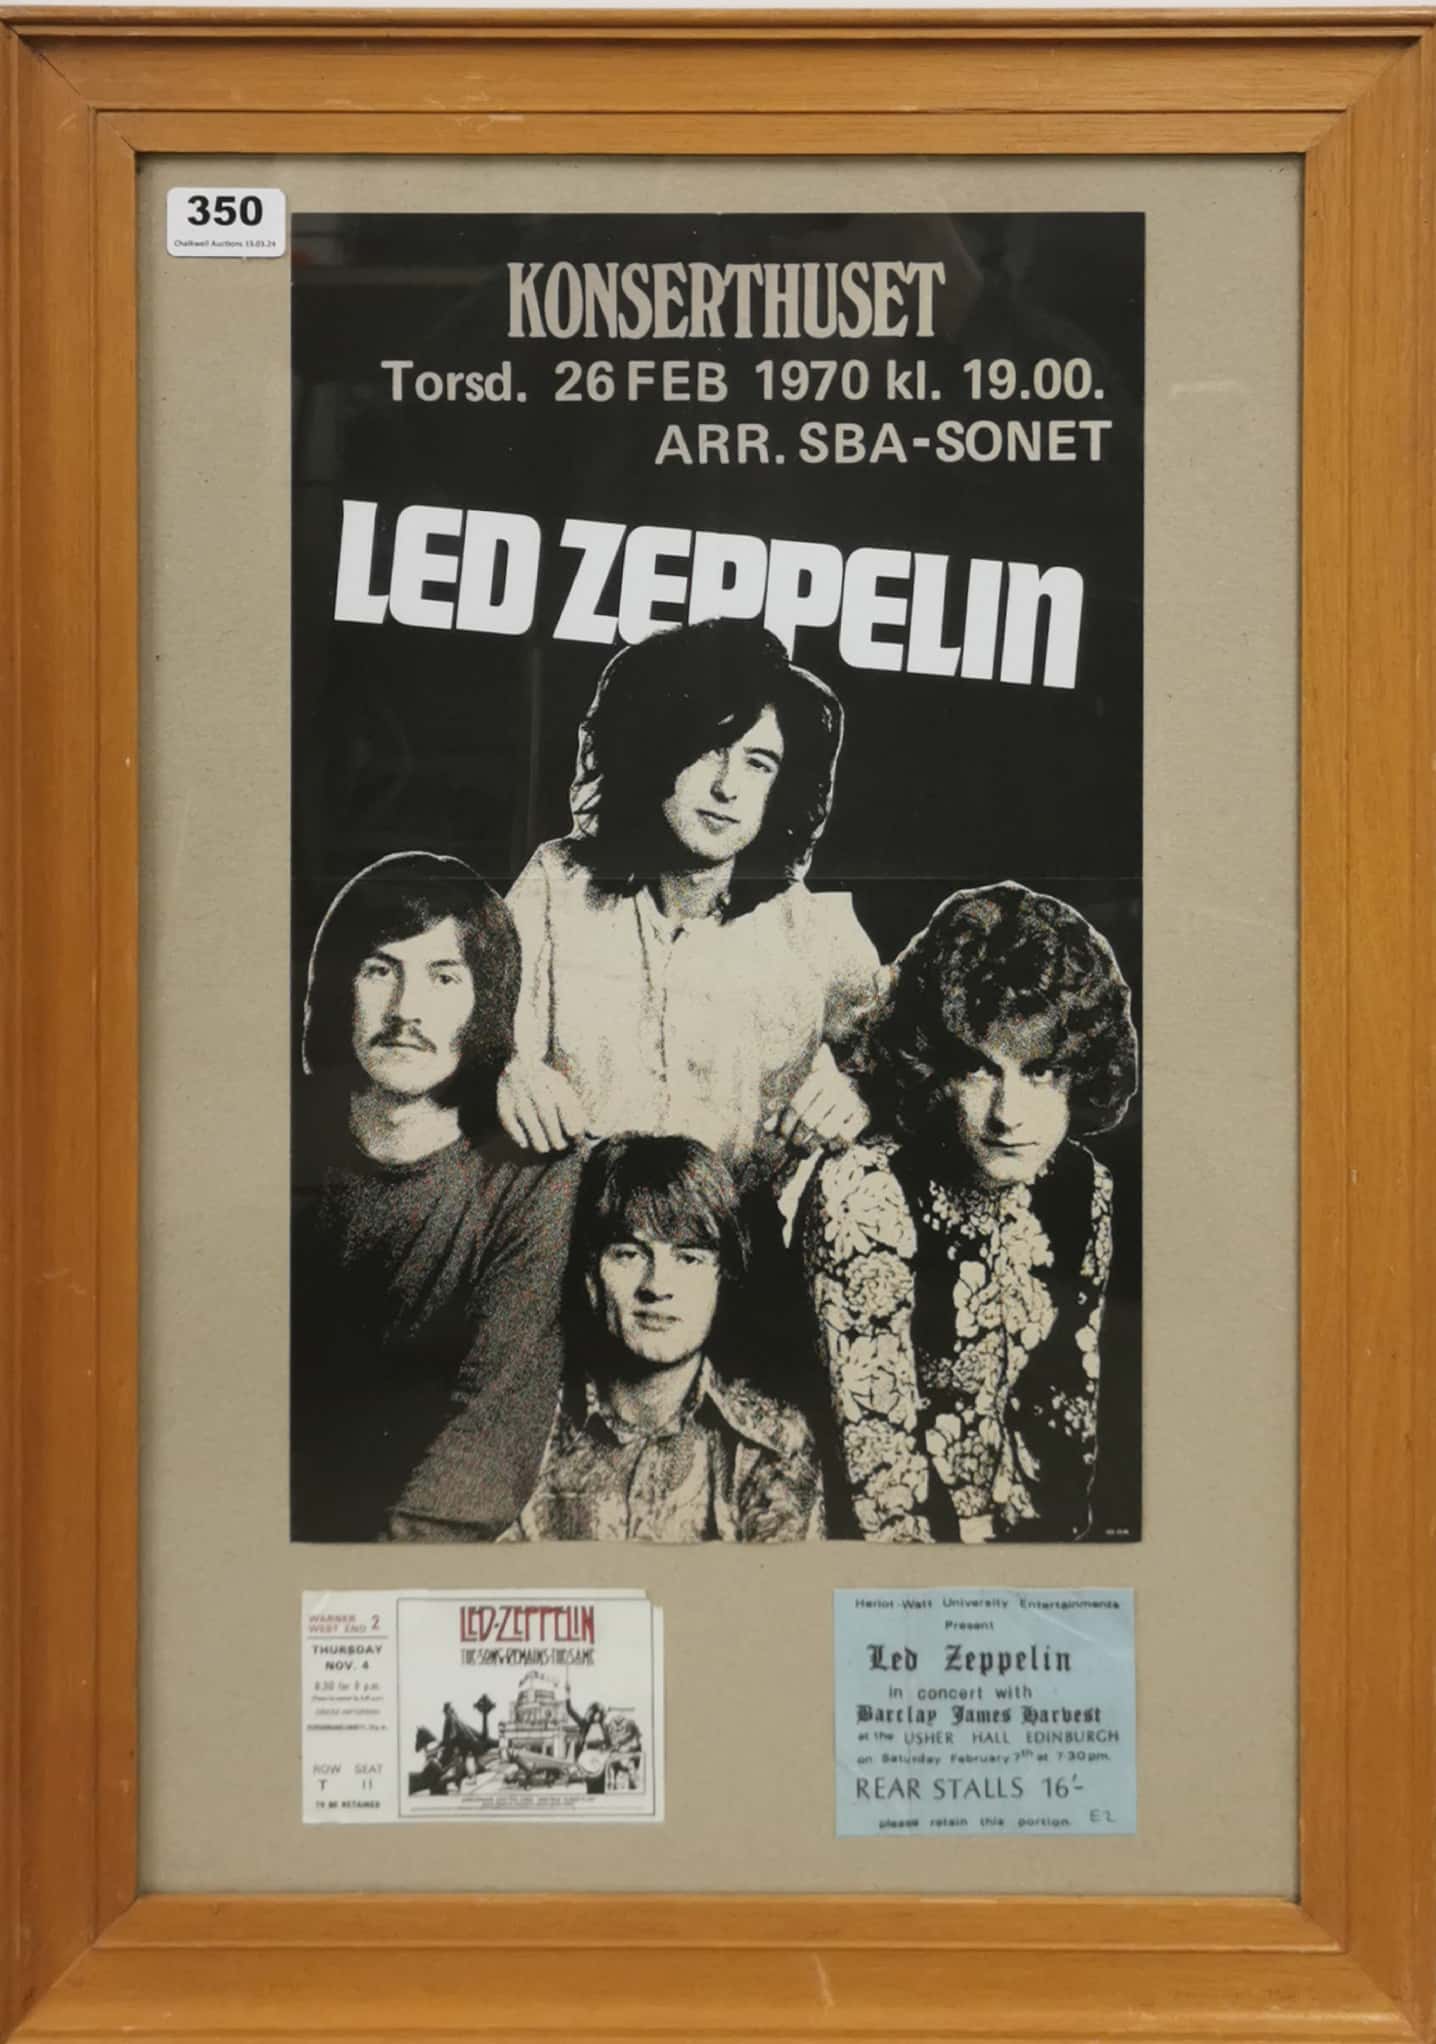 A framed 'Led Zeppelin' poster from Konserthuset Stockholm 1970 with two Led Zeppelin concert - Image 2 of 6